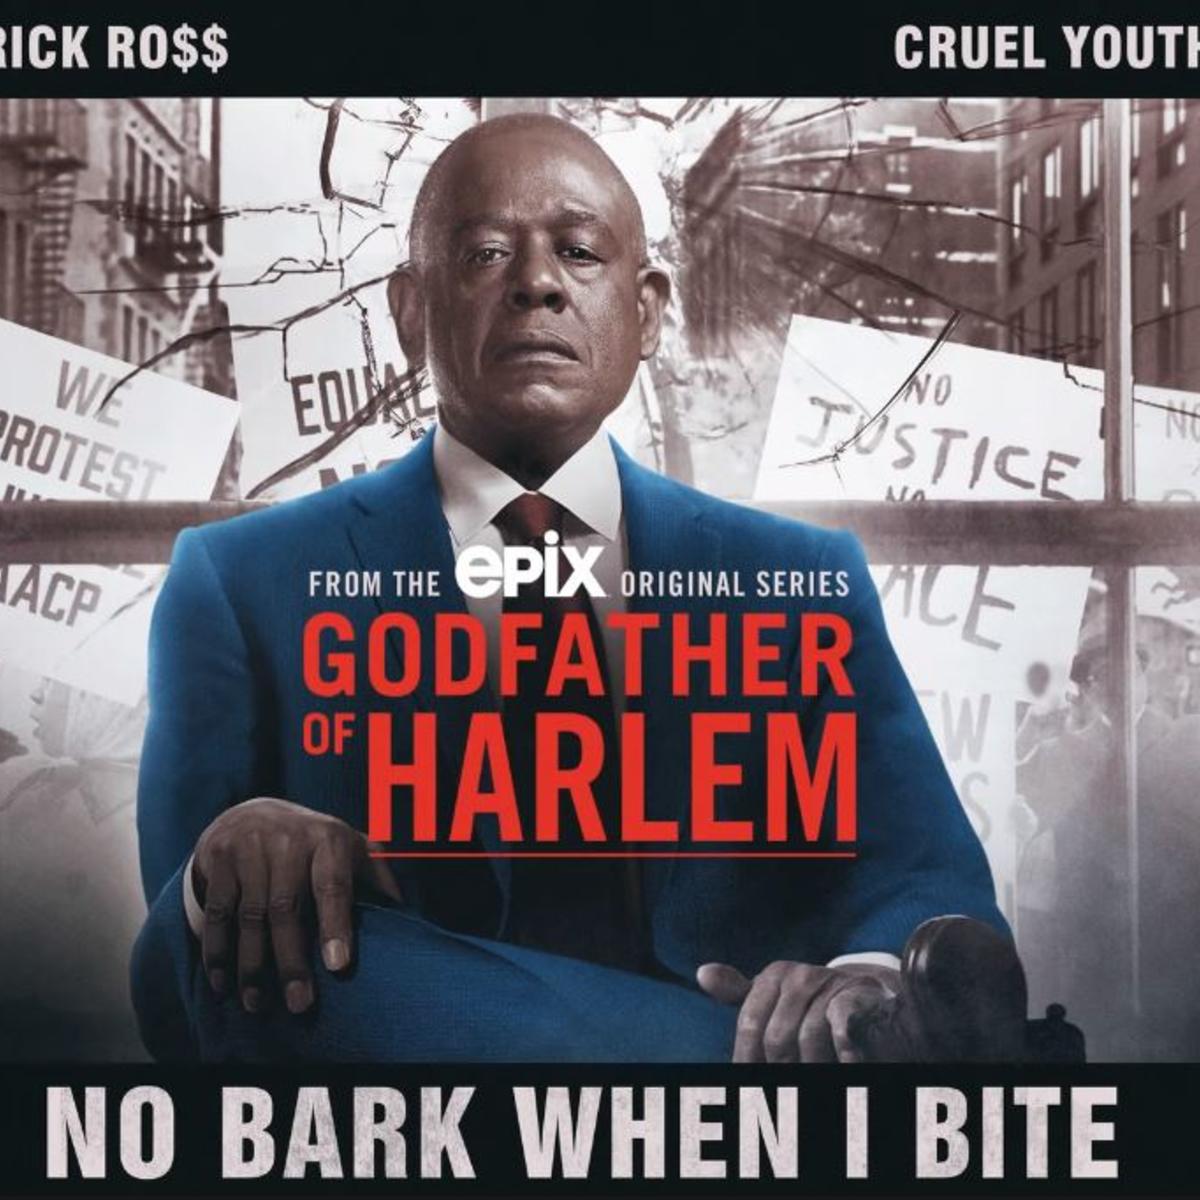 Rick Ross Feat. Cruel Youth – “No Bark When I Bite” [Audio]